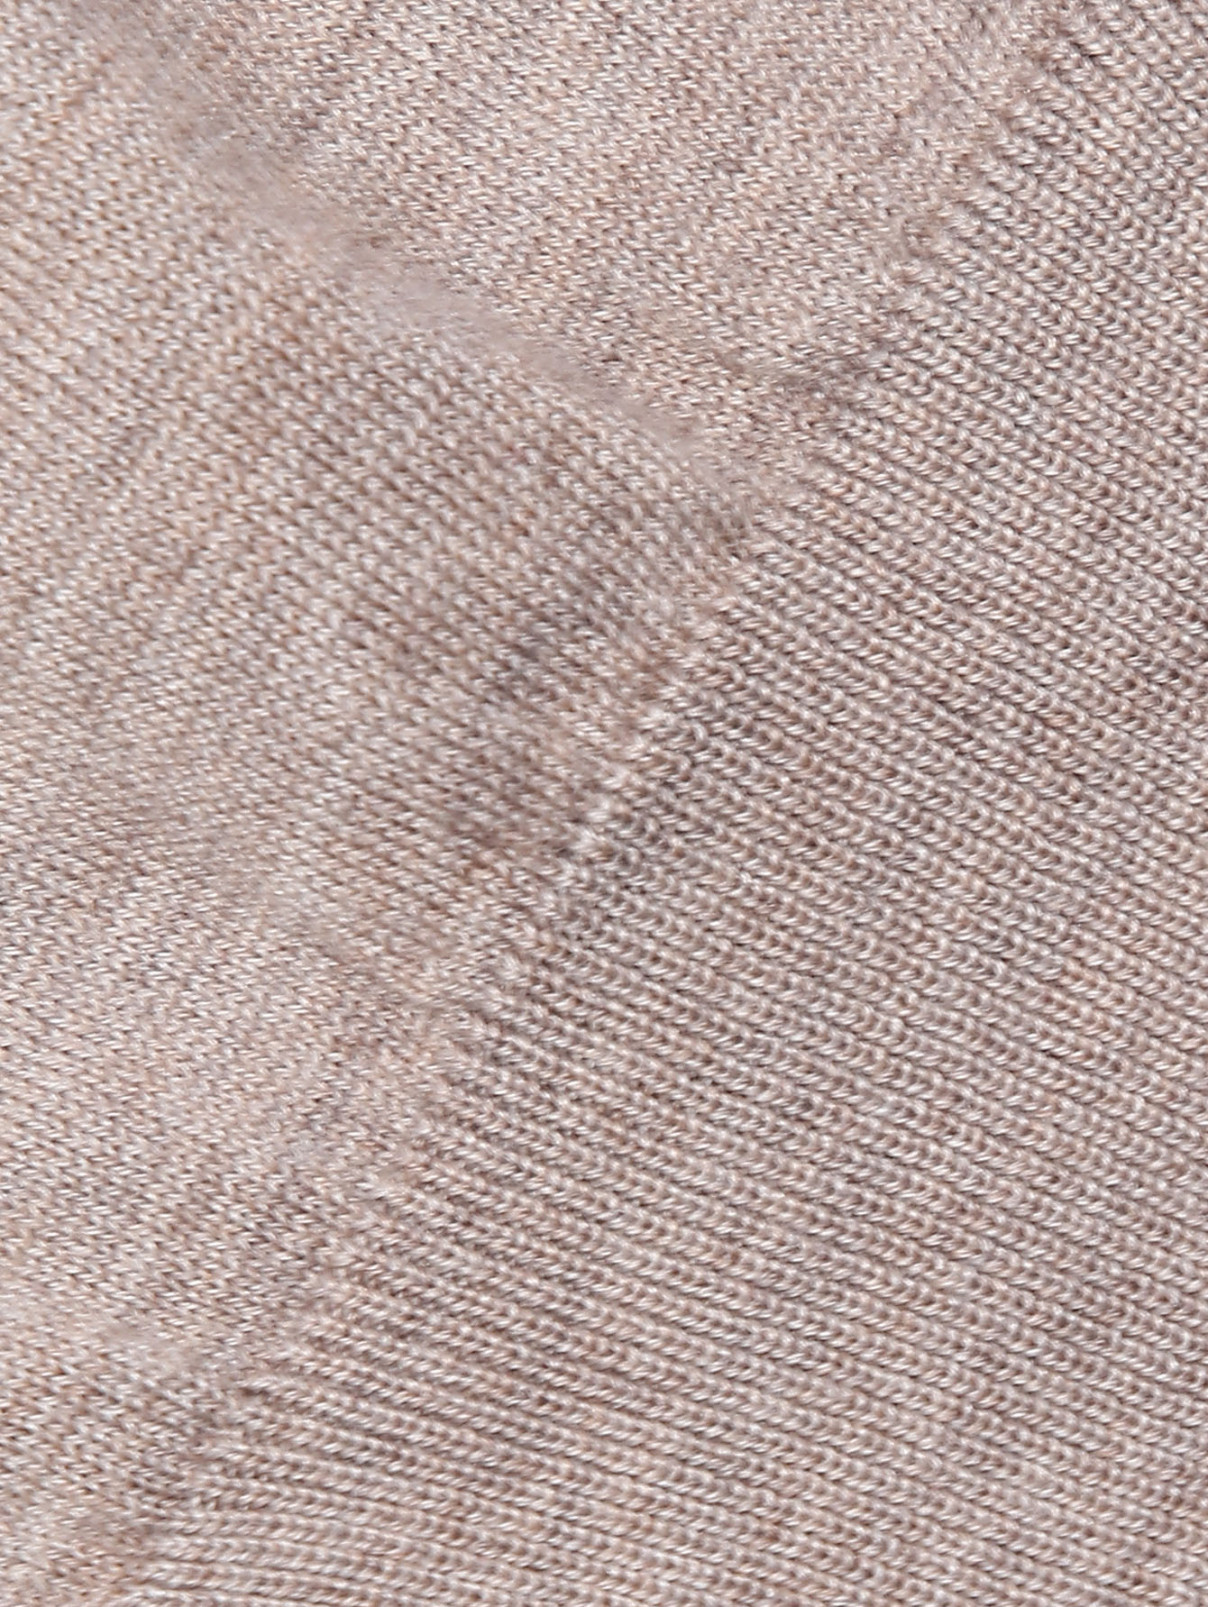 Джемпер из шерсти и шелка Piacenza Cashmere  –  Деталь1  – Цвет:  Бежевый